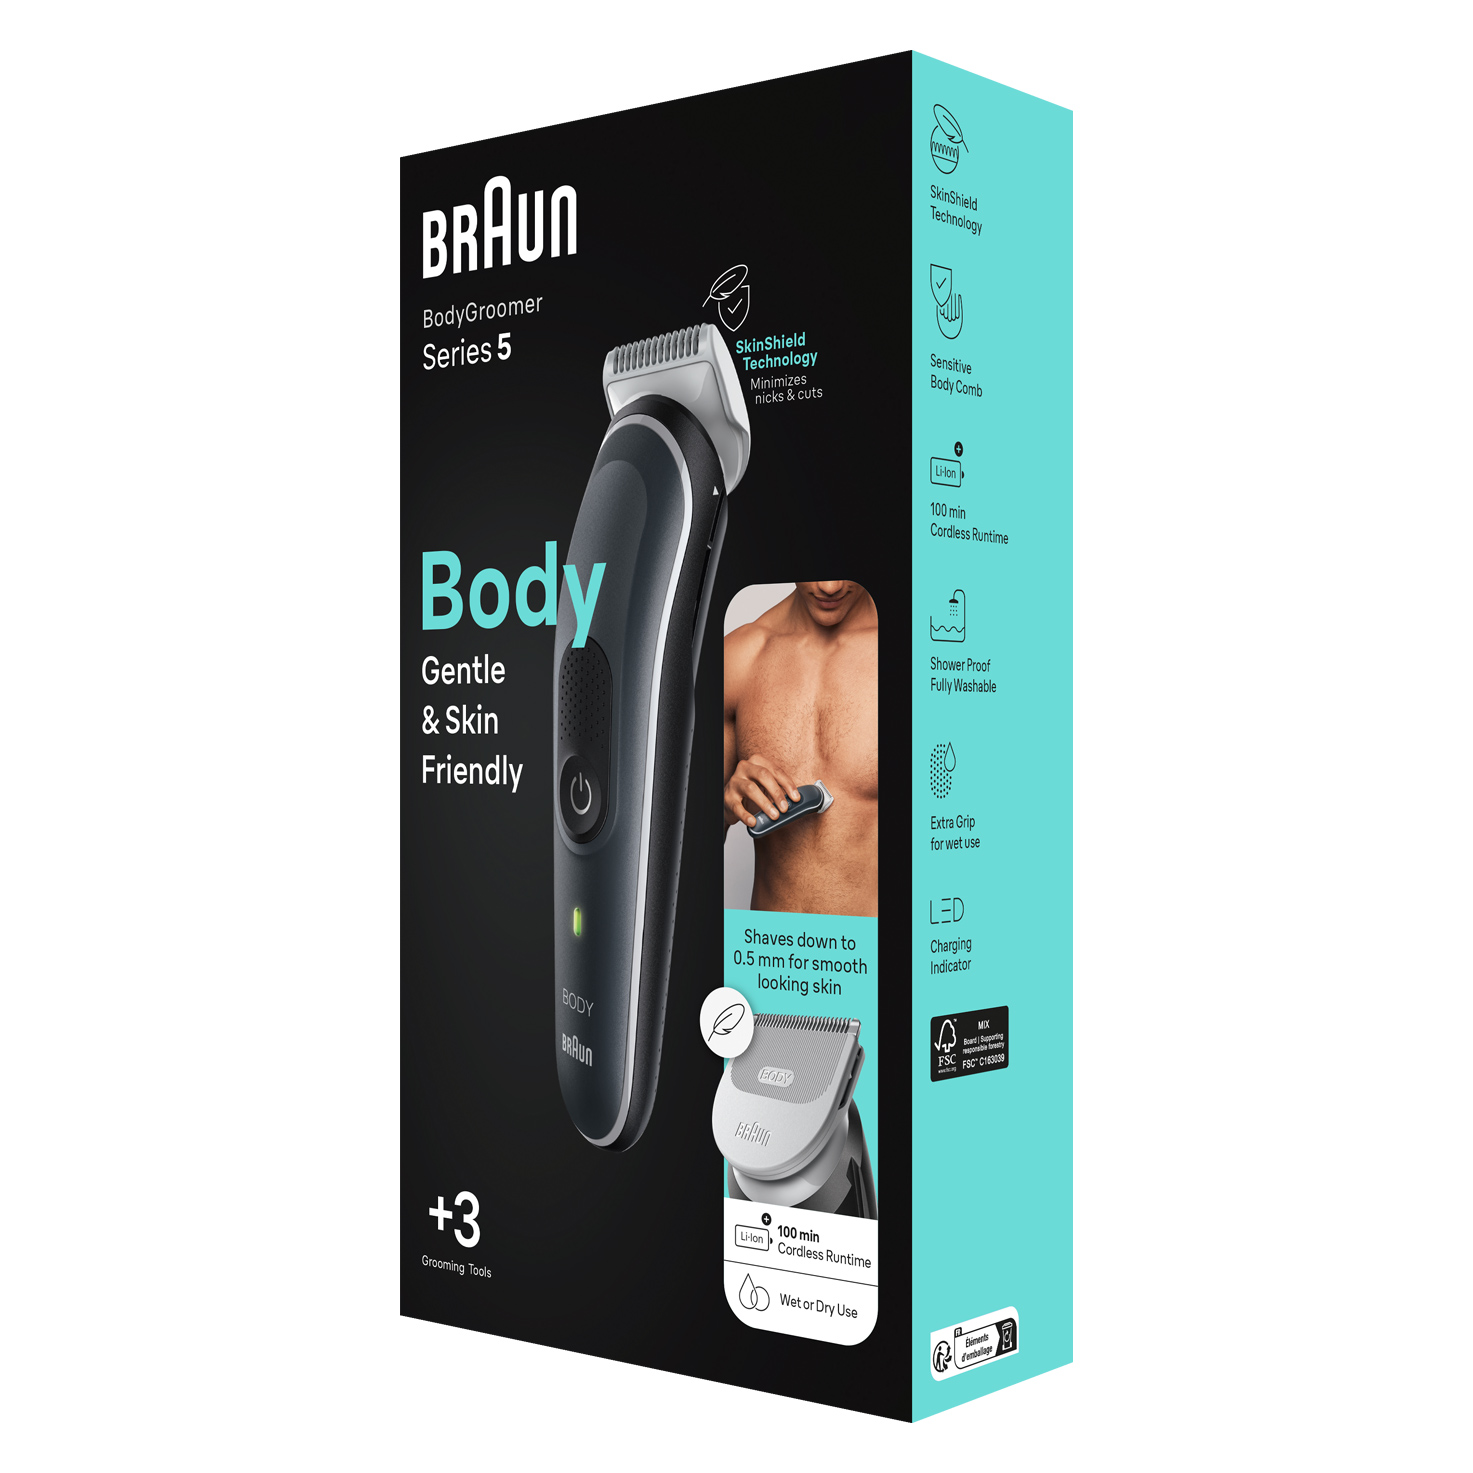 Braun BG5340 body groomer | dry & Braun | SG Wet grooming body